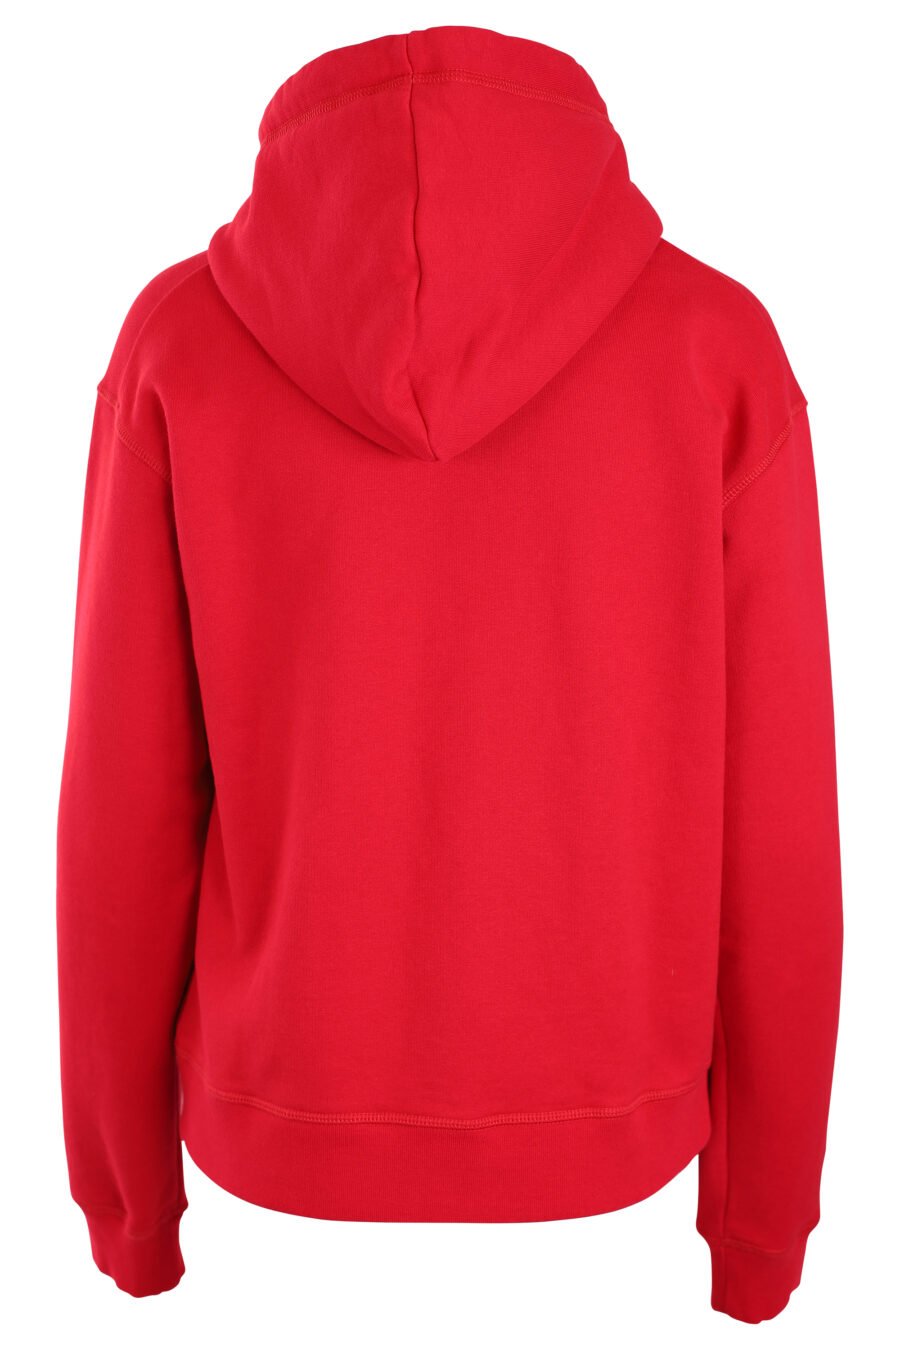 Dsquared2 - Sudadera roja con capucha y logo icon blanco - BLS Fashion